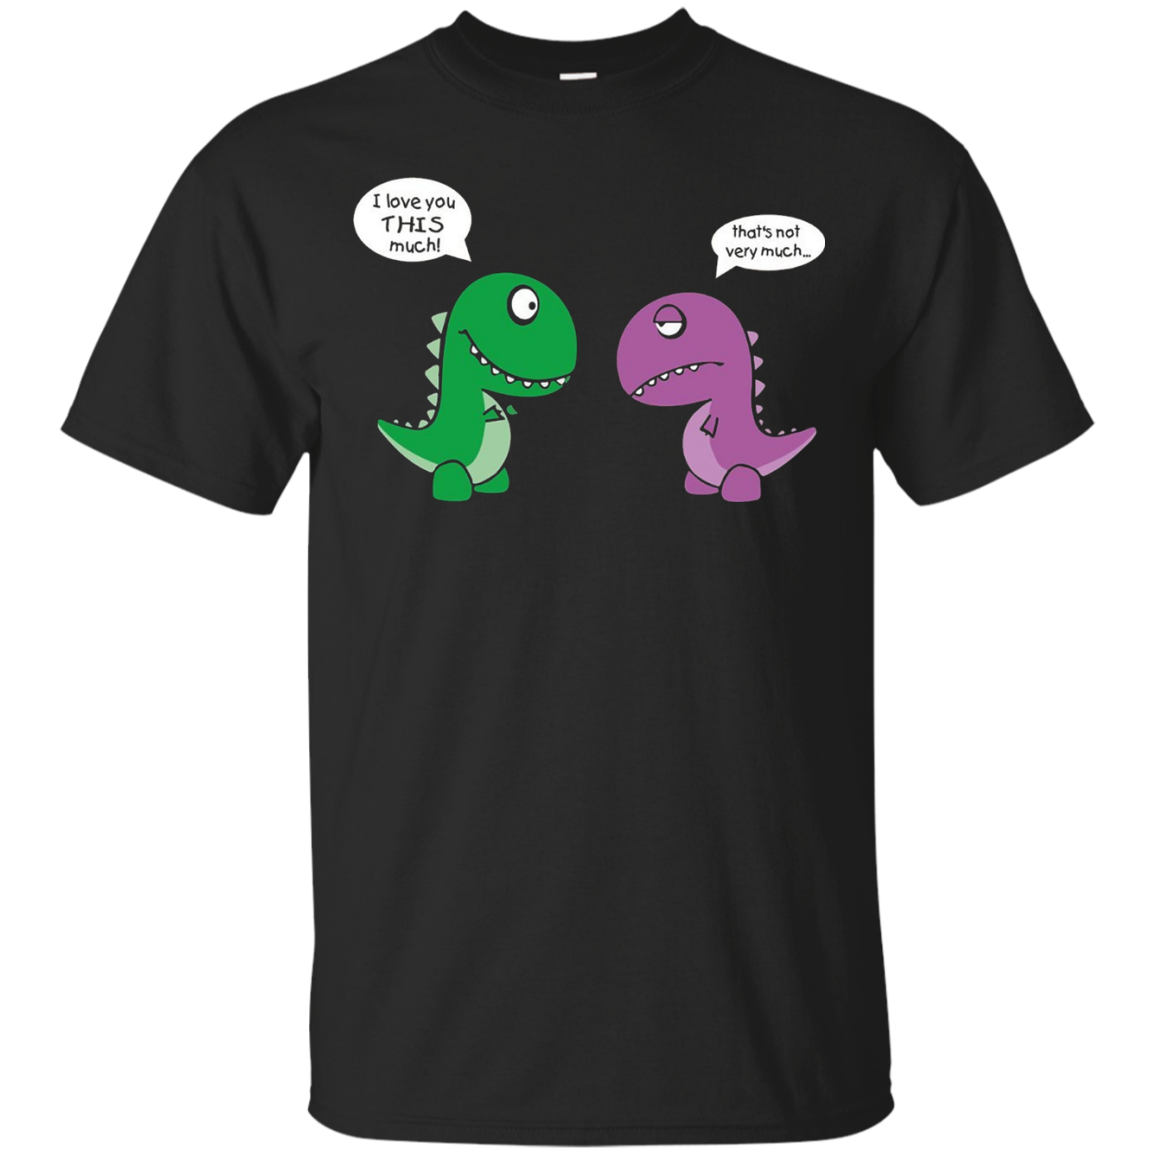 Cute T-Rex "I LOVE YOU THIS MUCH" T-Shirt